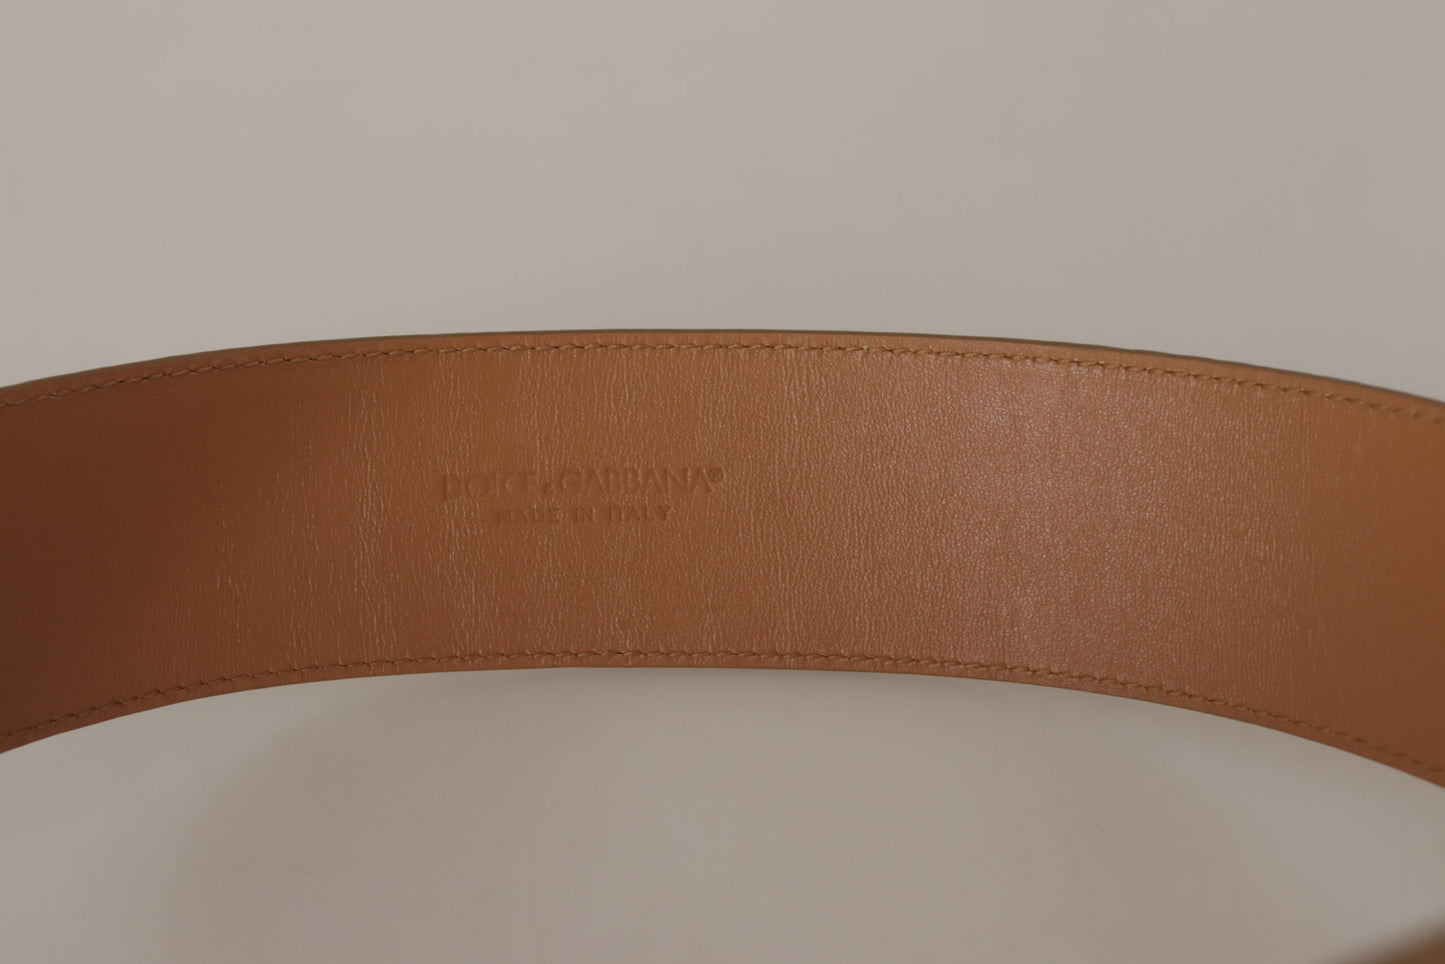 Elegant Beige Leather Belt with Engraved Buckle